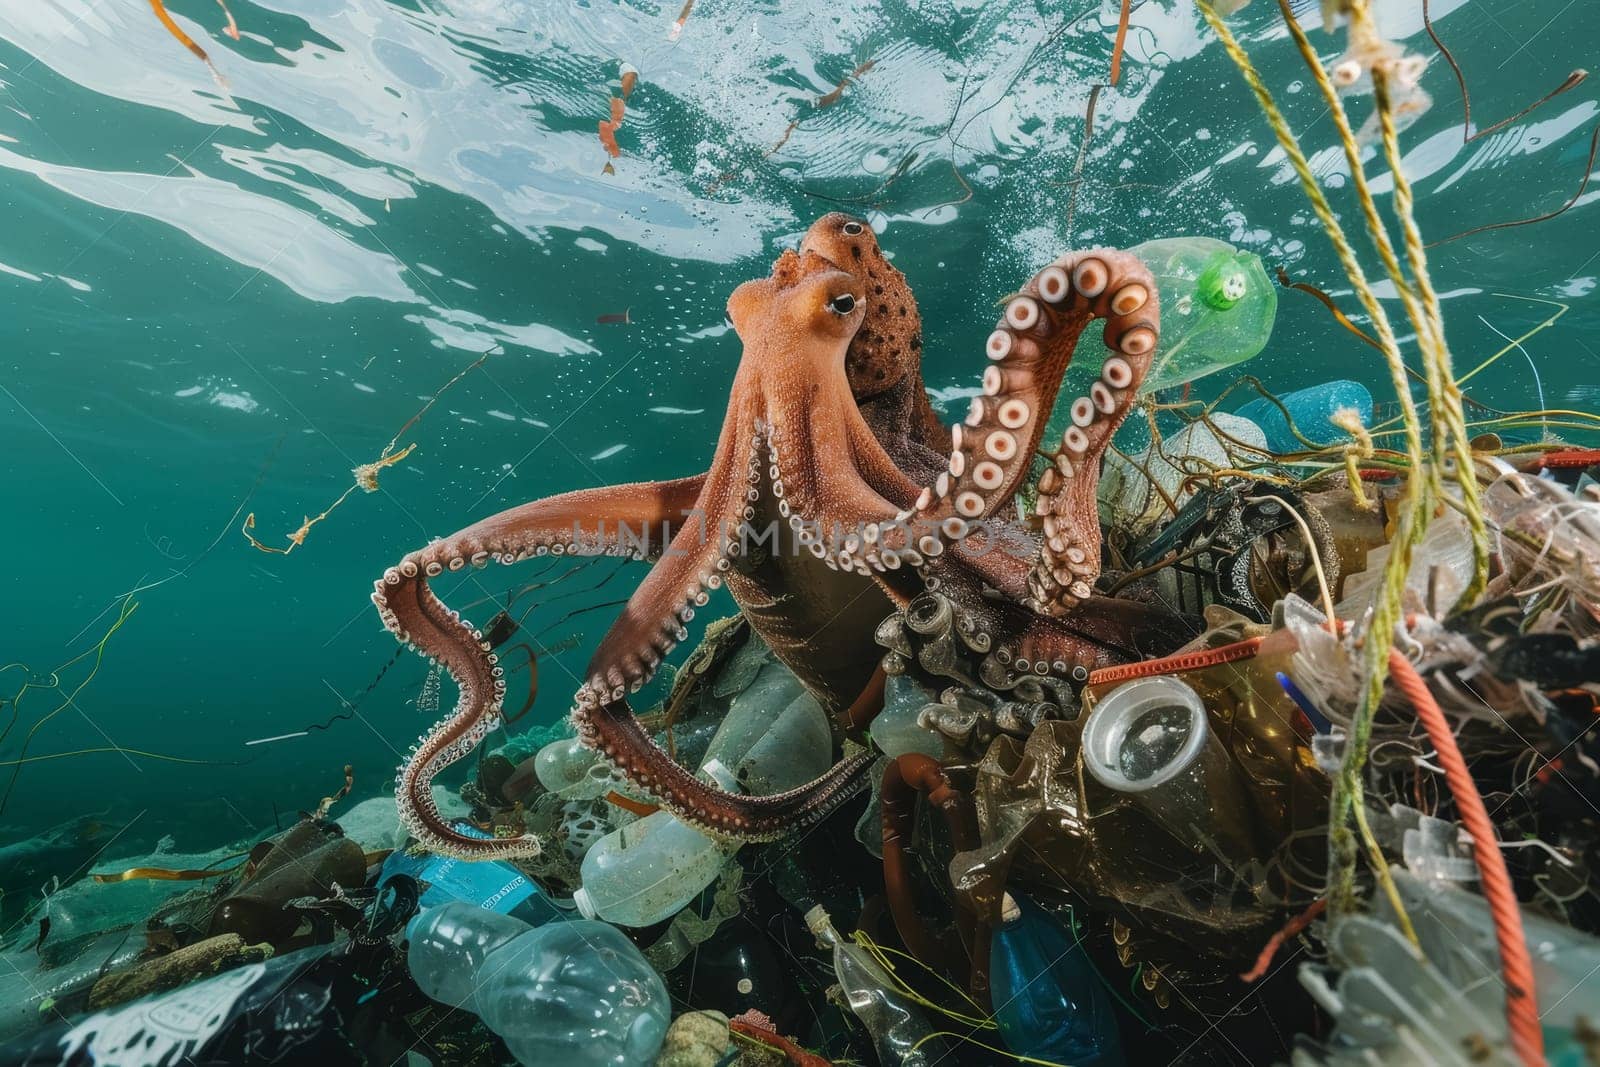 Ocean Life Amidst Plastic Pollution by andreyz